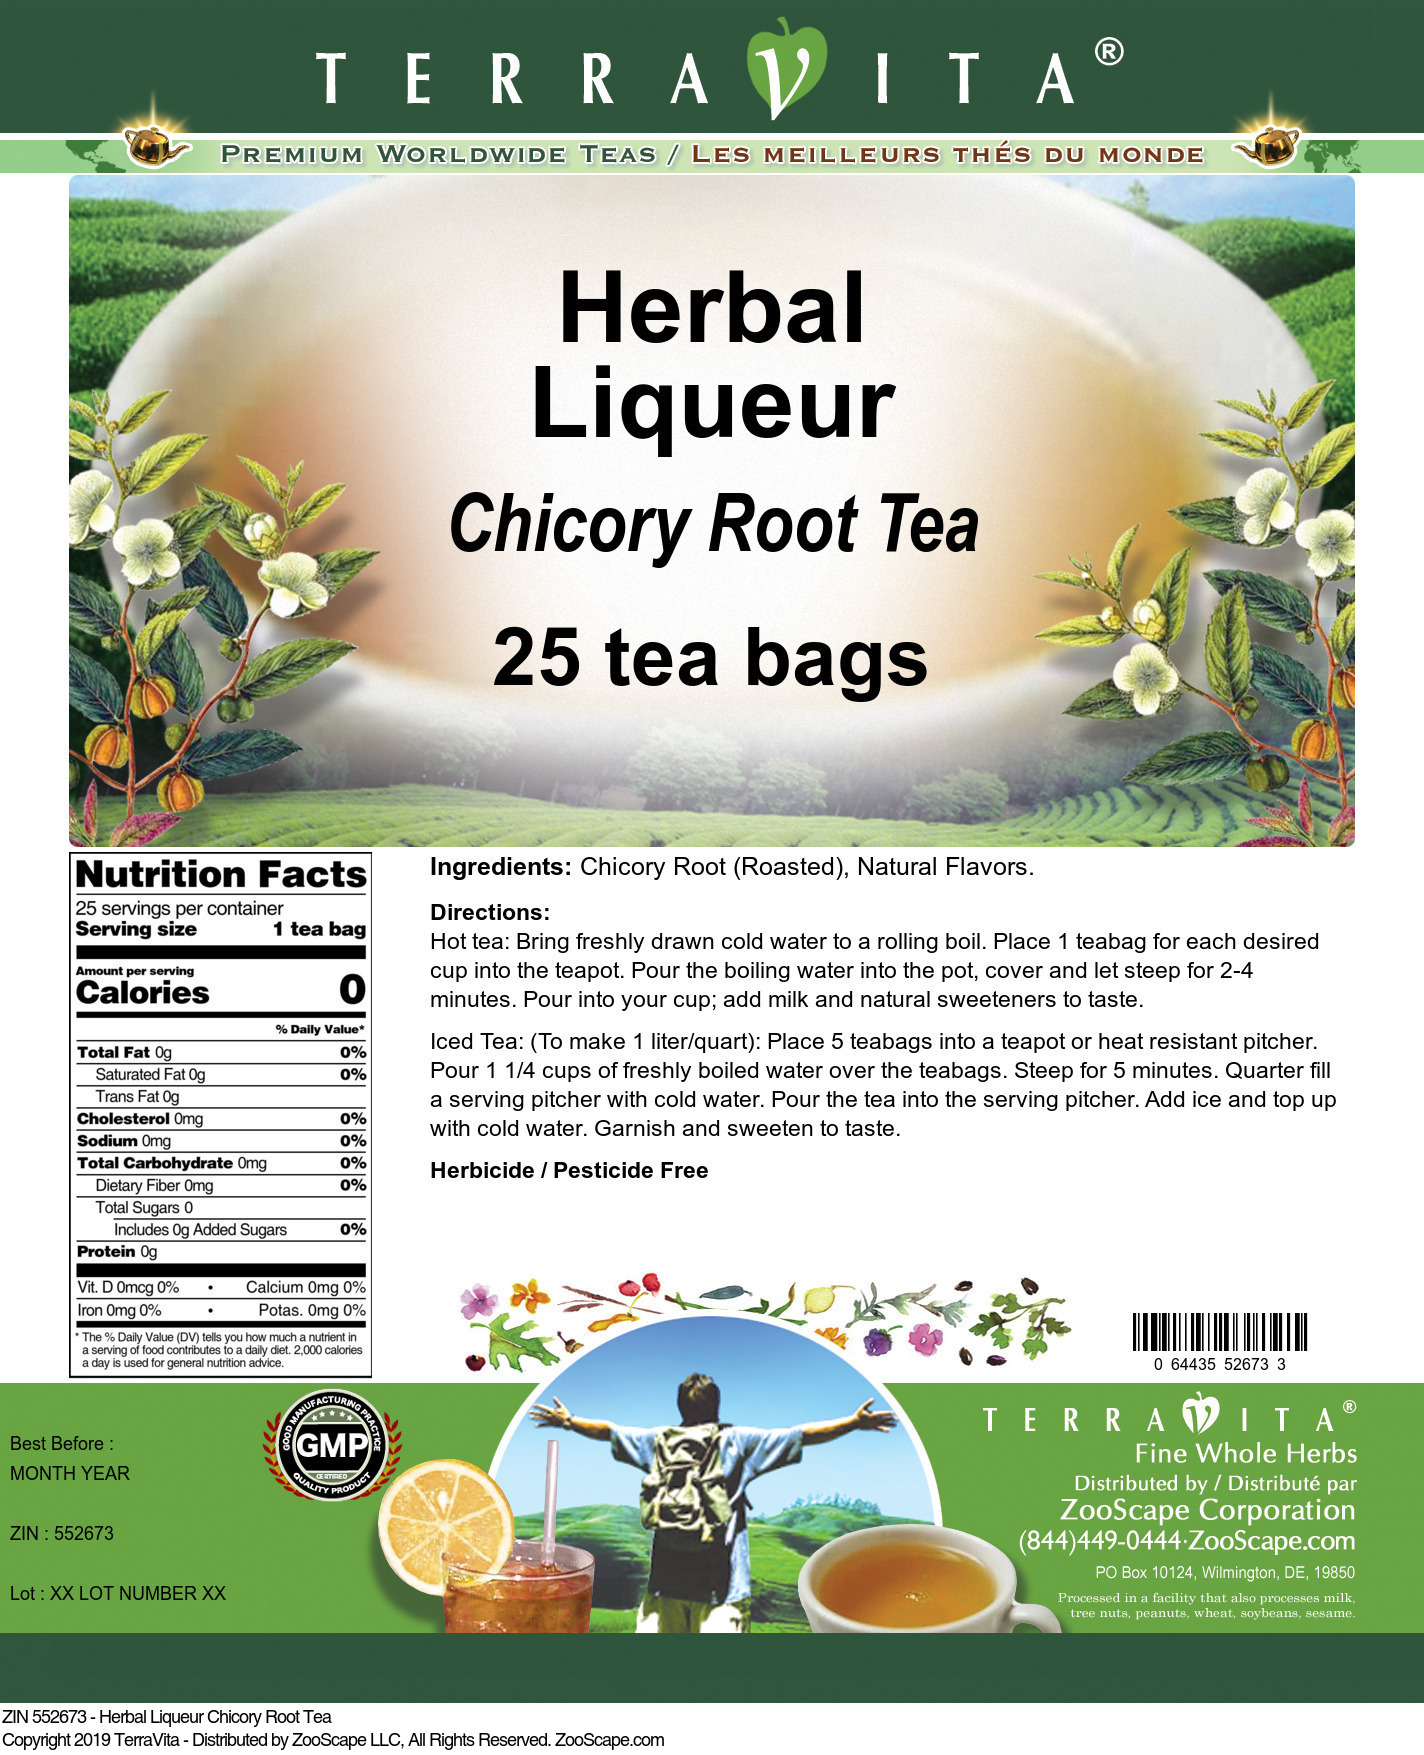 Herbal Liqueur Chicory Root Tea - Label